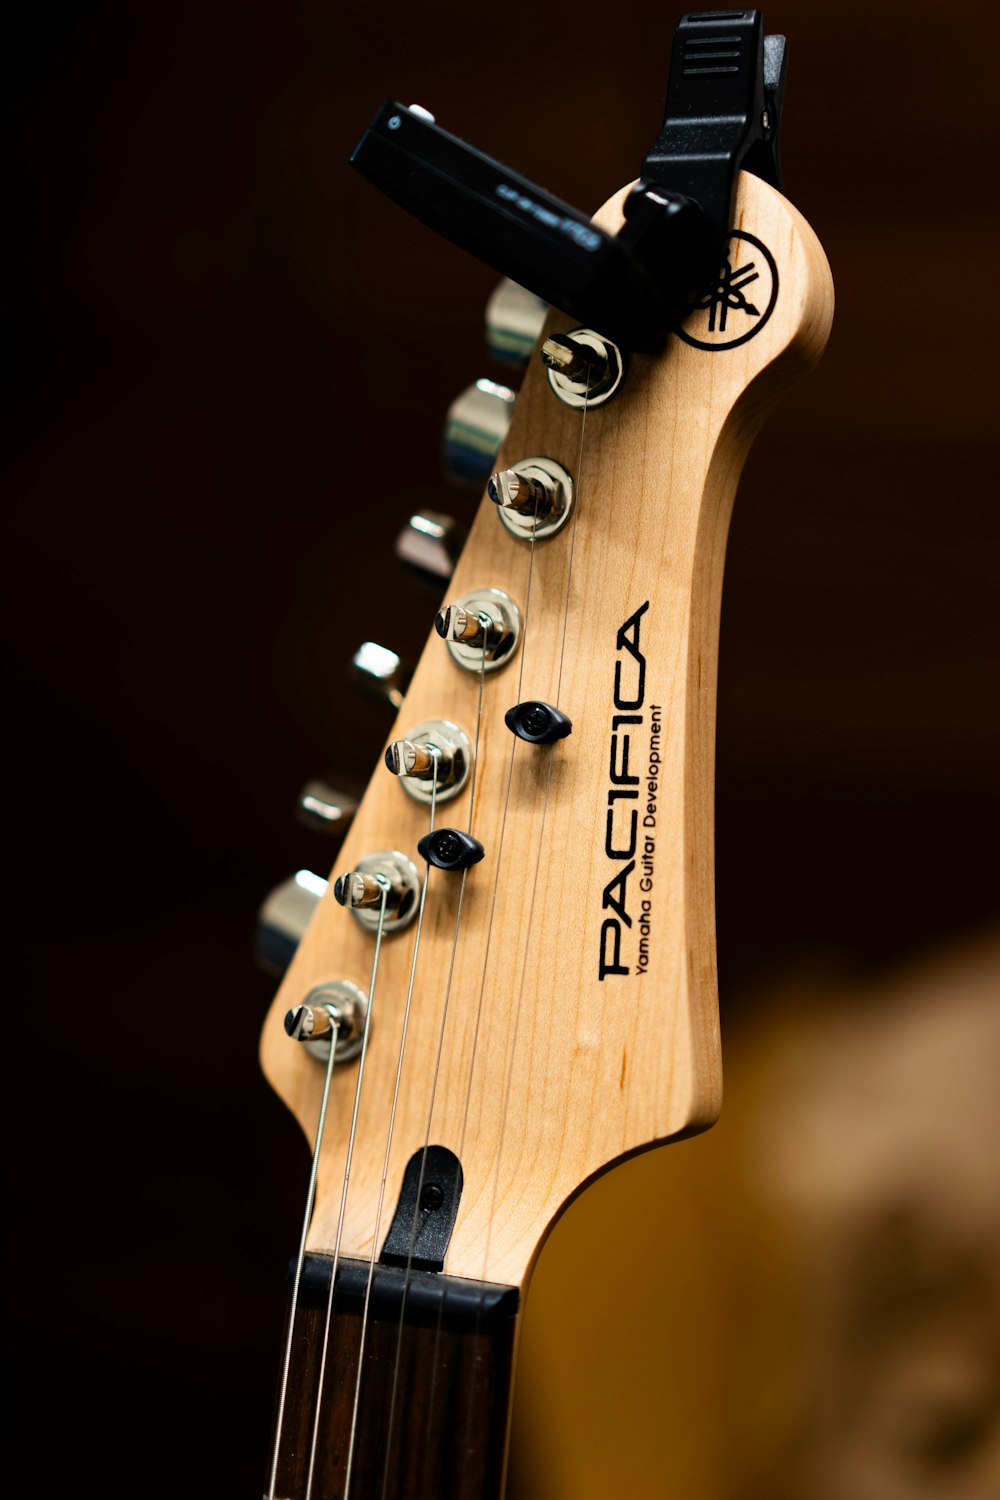 a close up of a wooden guitar neck